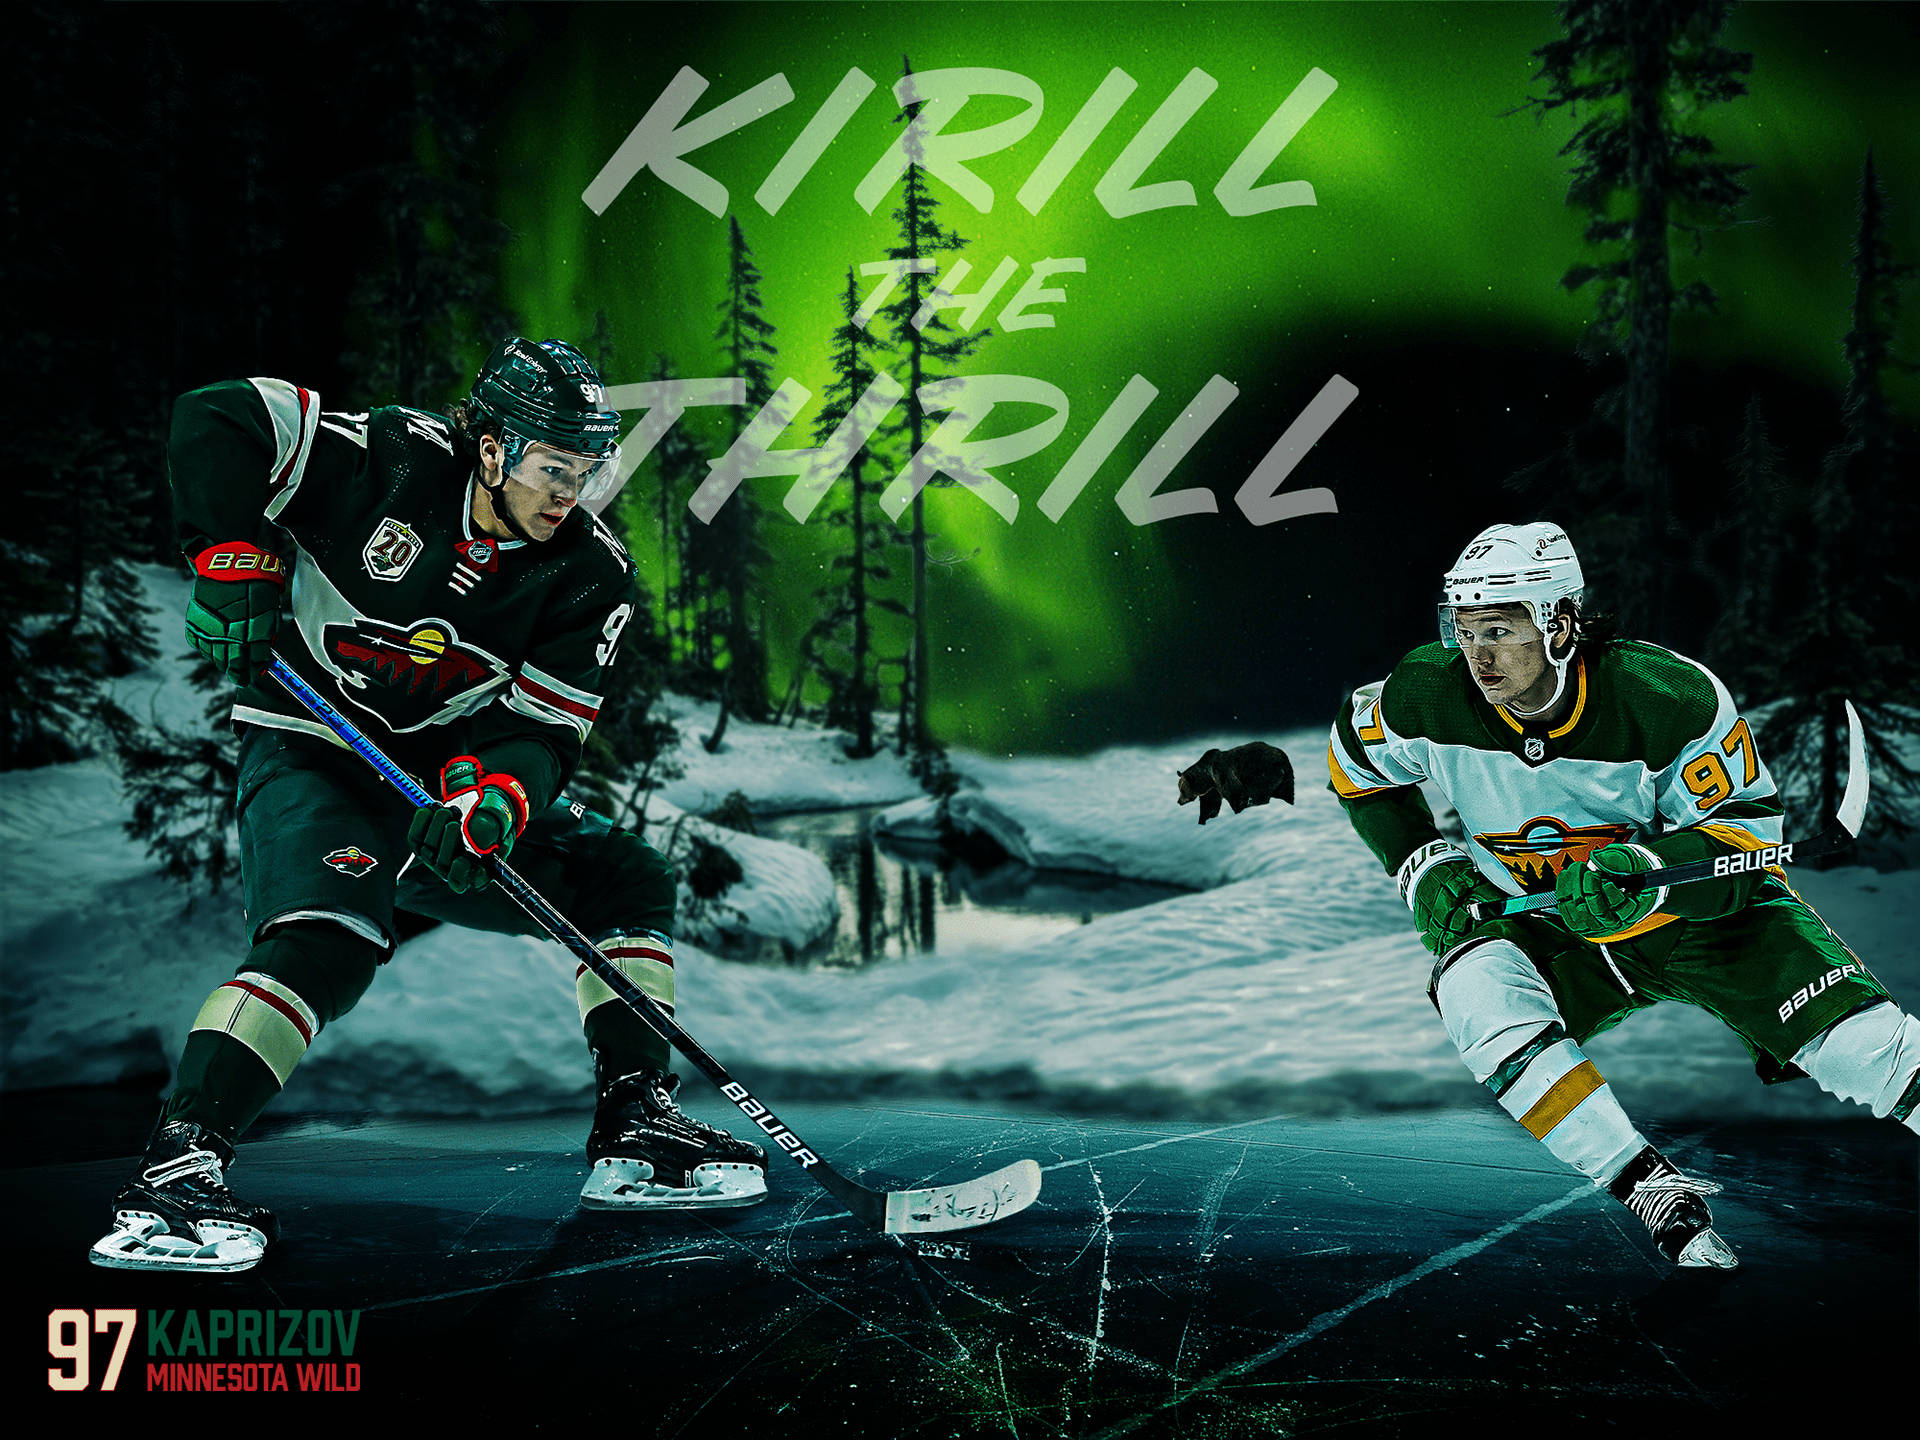 Kirill Kaprizov, The Rising Star of Ice Hockey Wallpaper